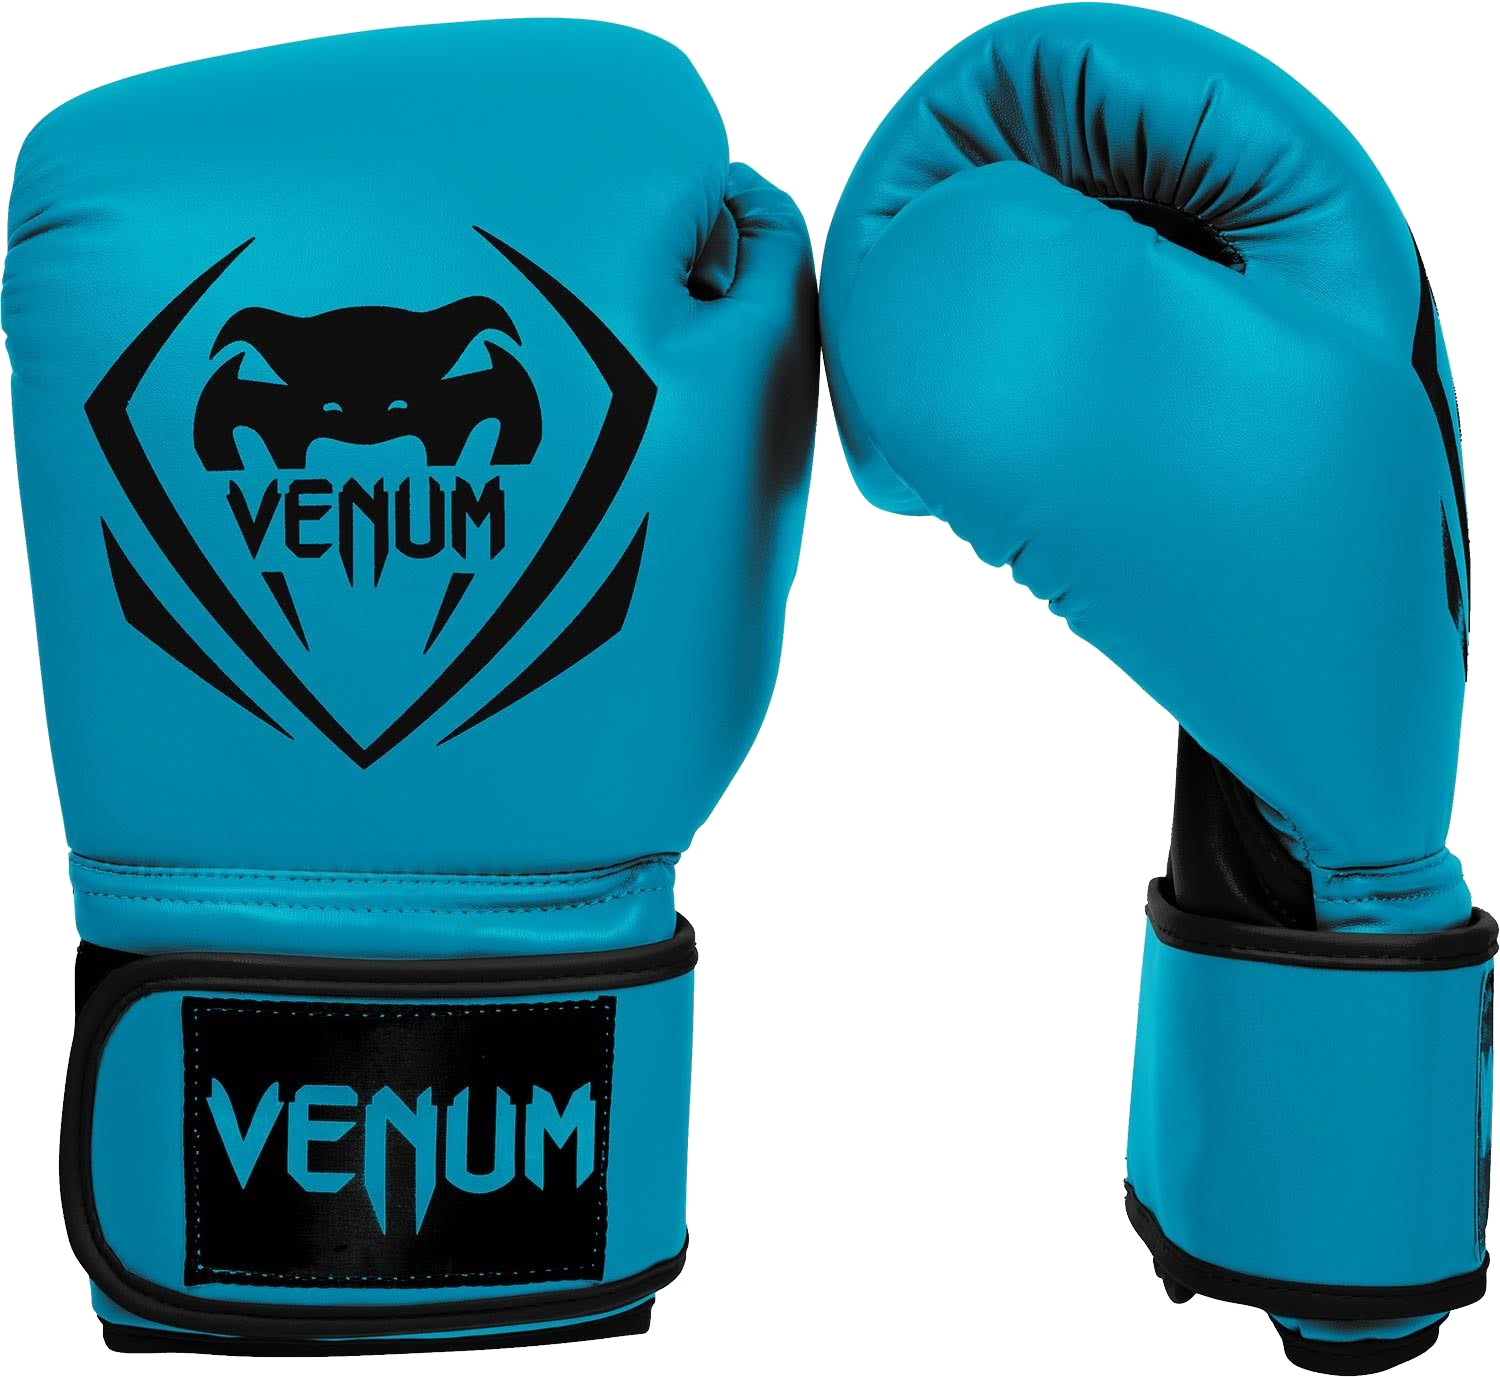 Blue Venum Boxing Gloves PNG image